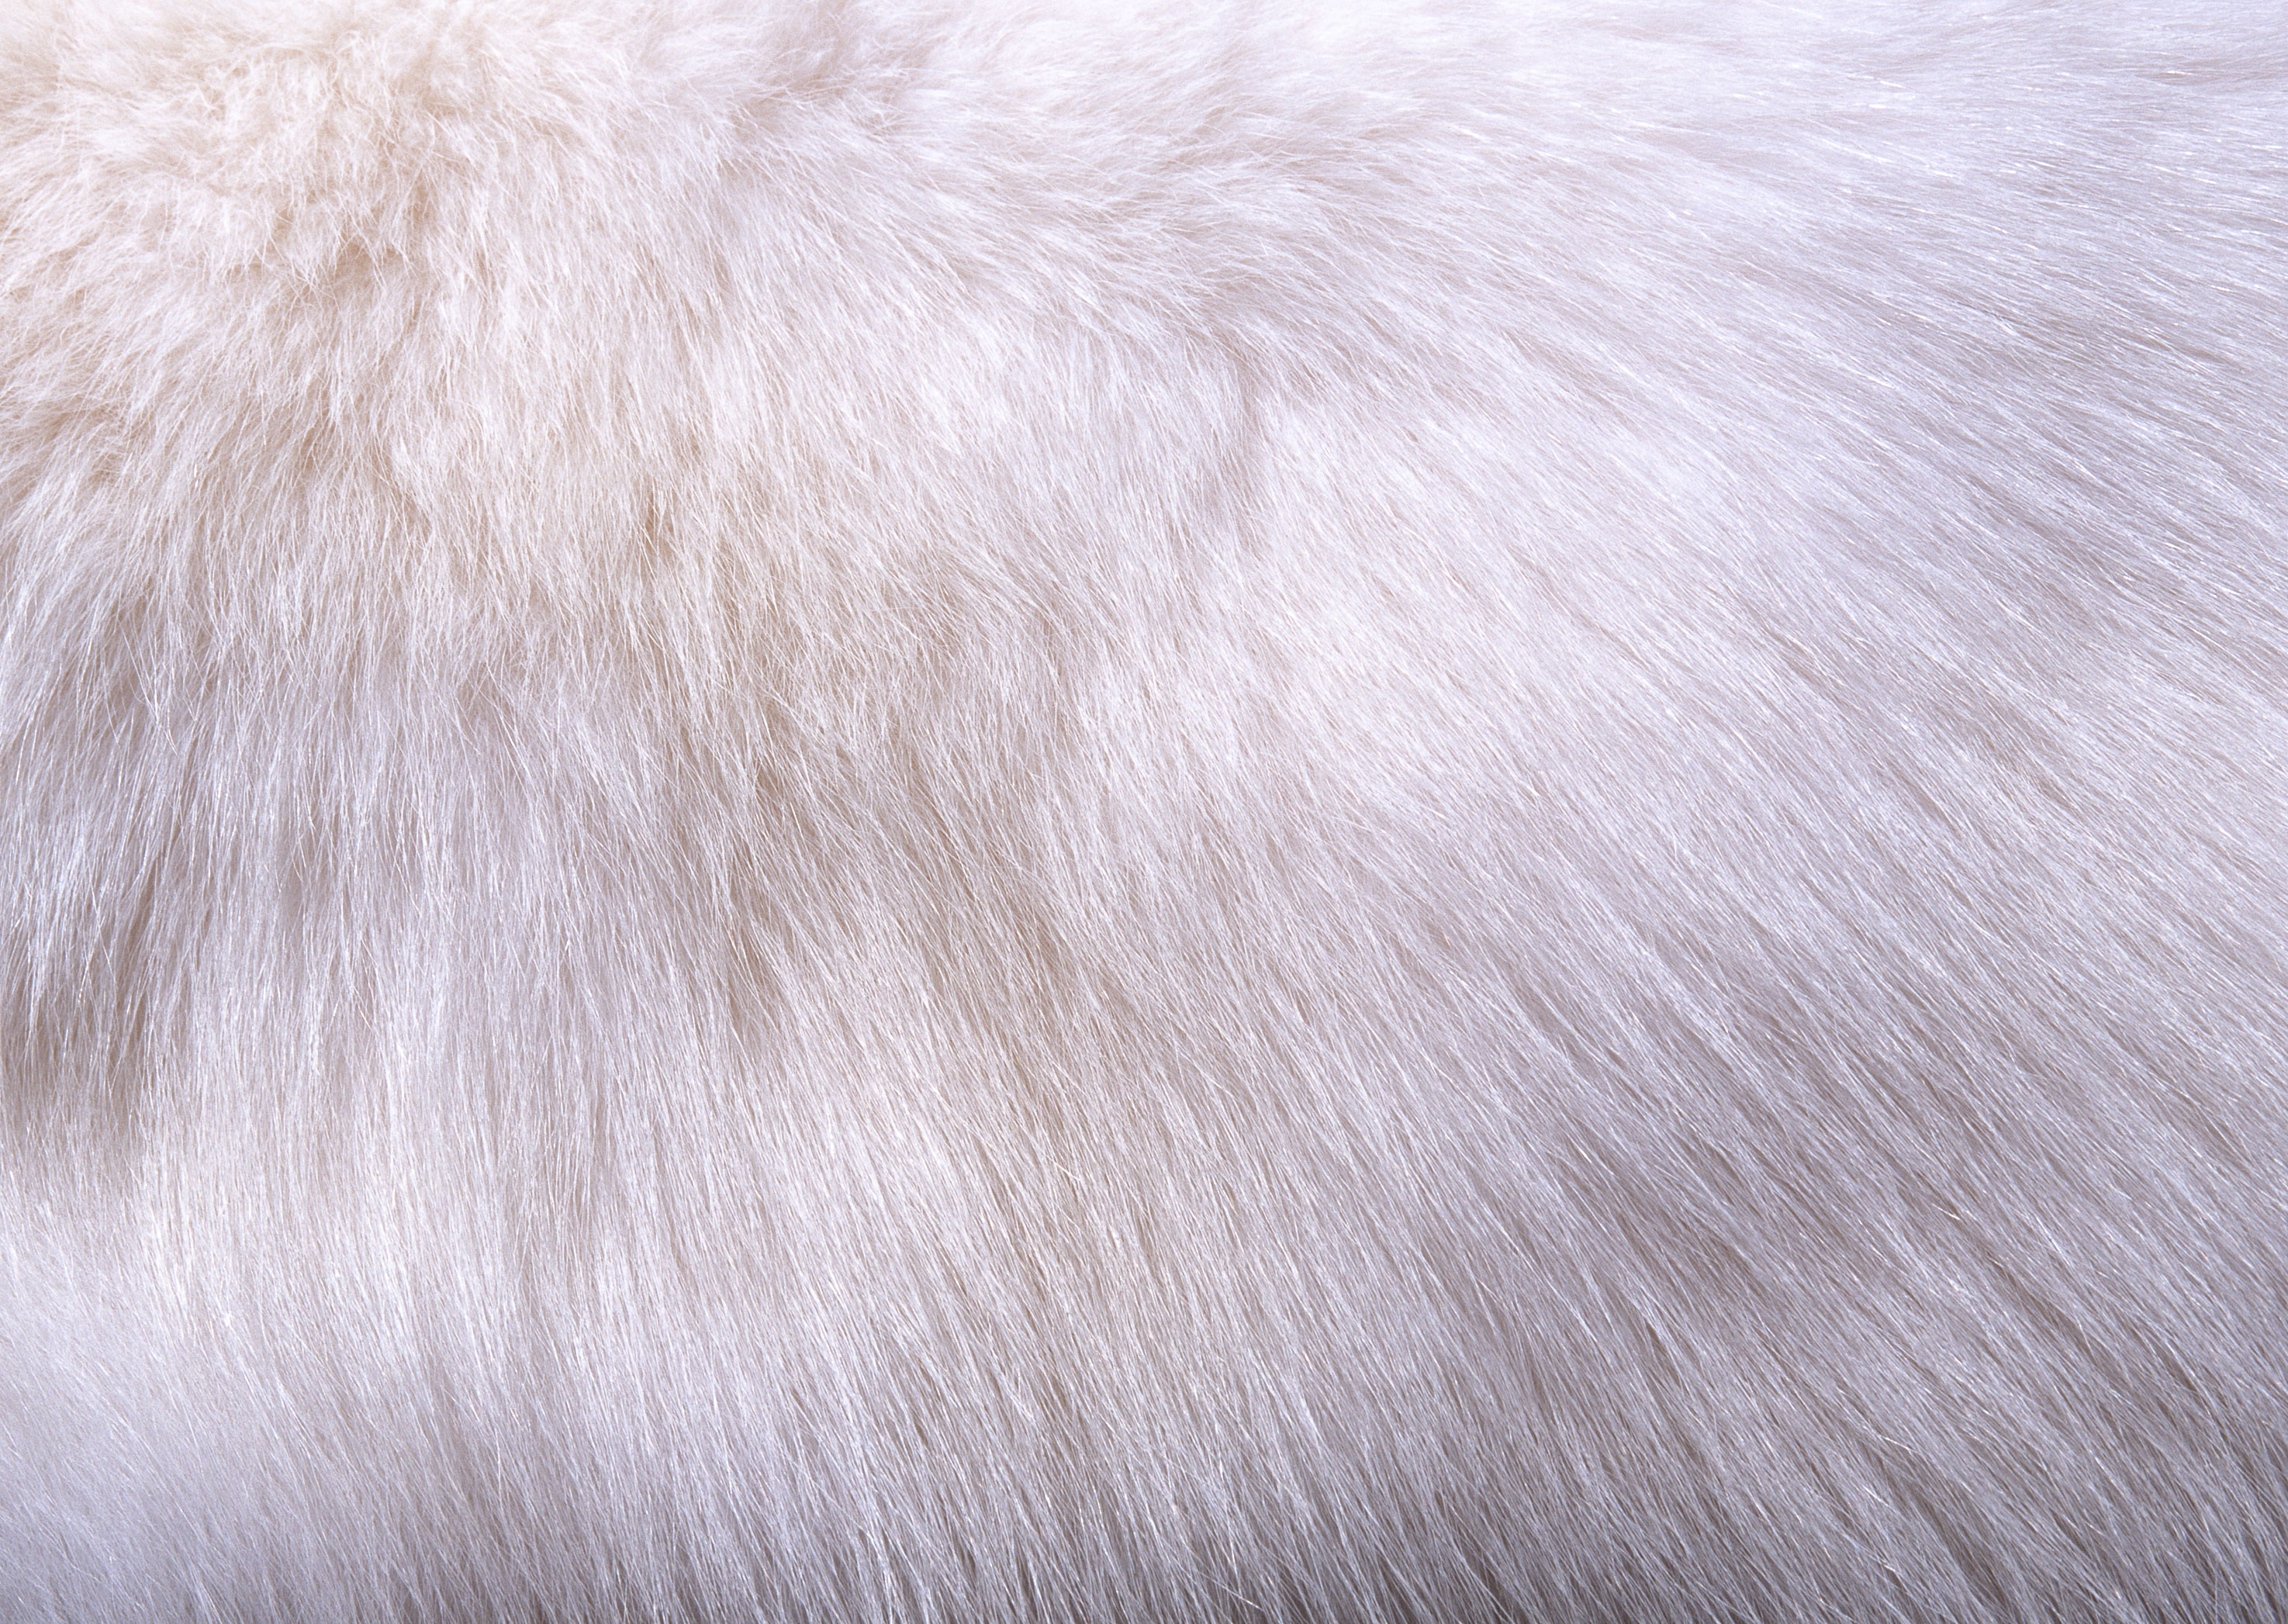 black fur wallpaper,fur,skin,fur clothing,textile,silver